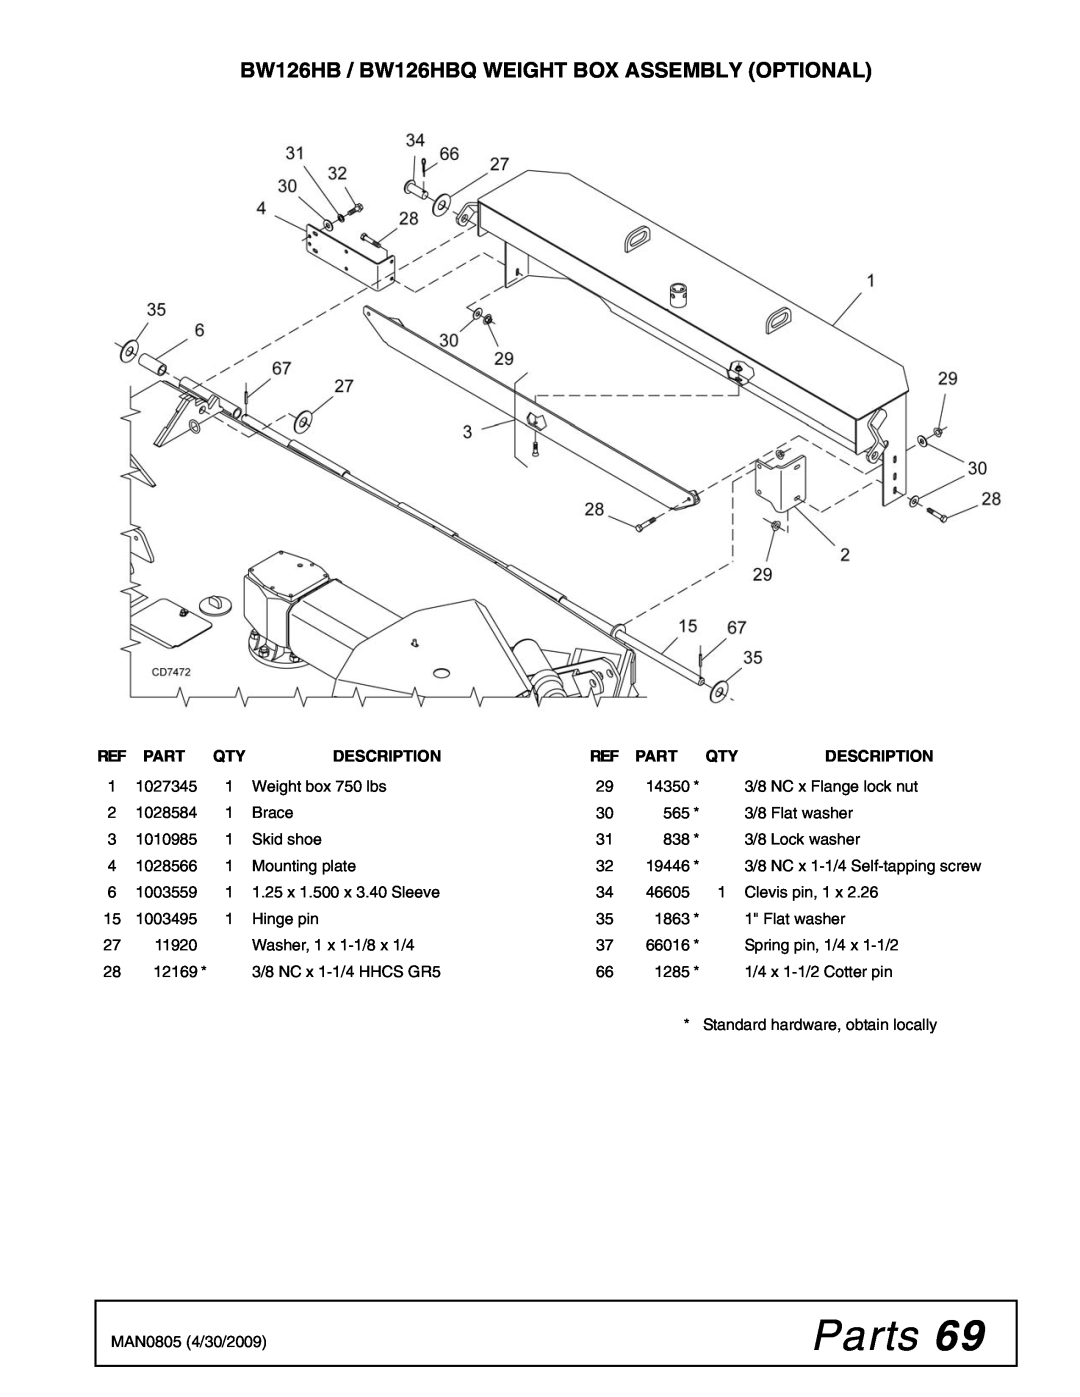 Woods Equipment BW180HBQ manual Parts, BW126HB / BW126HBQ WEIGHT BOX ASSEMBLY OPTIONAL, Description 